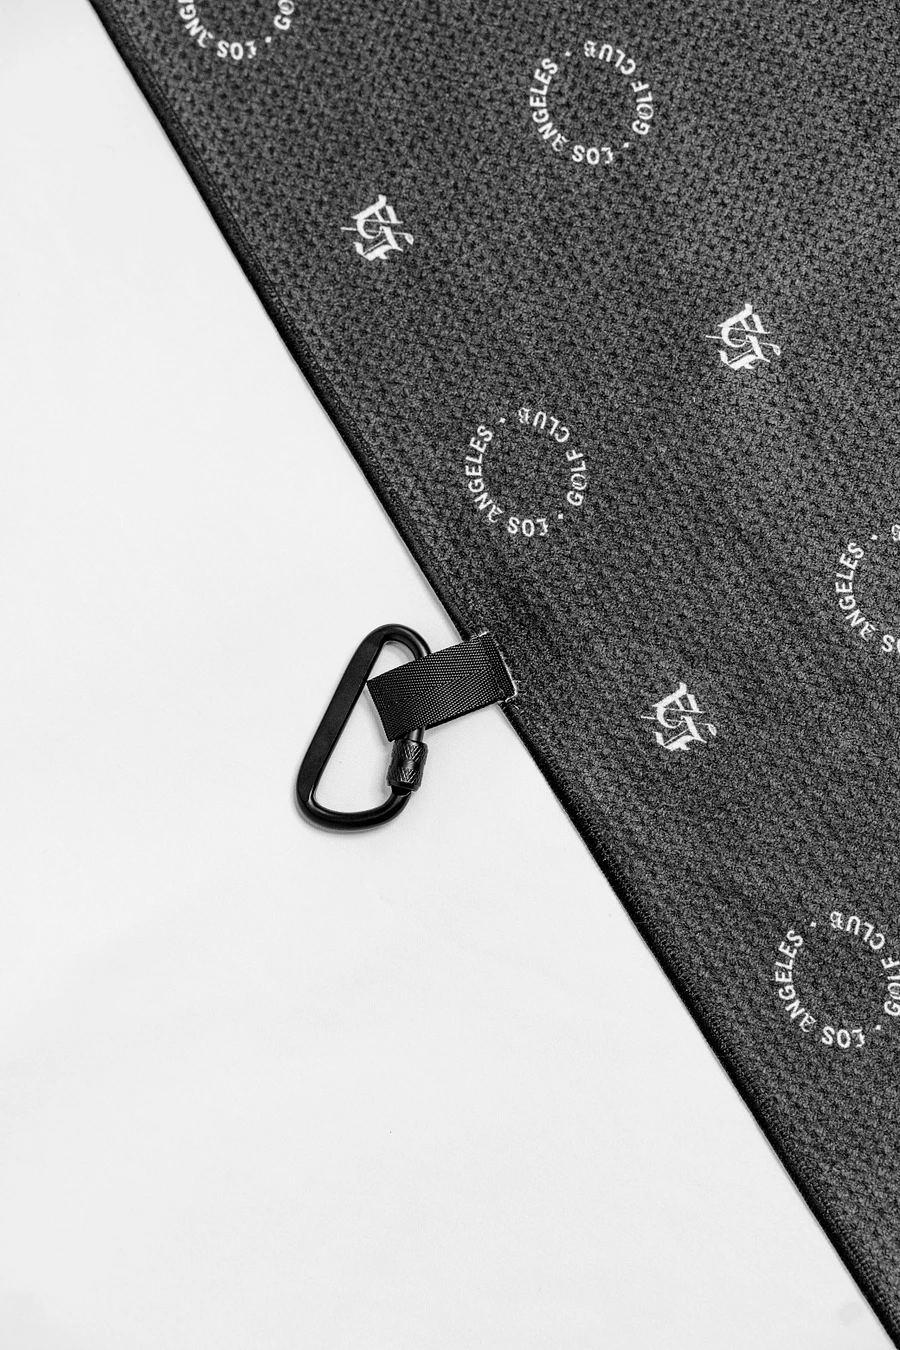 LAGC Black Double-Sided Golf Towel product image (3)